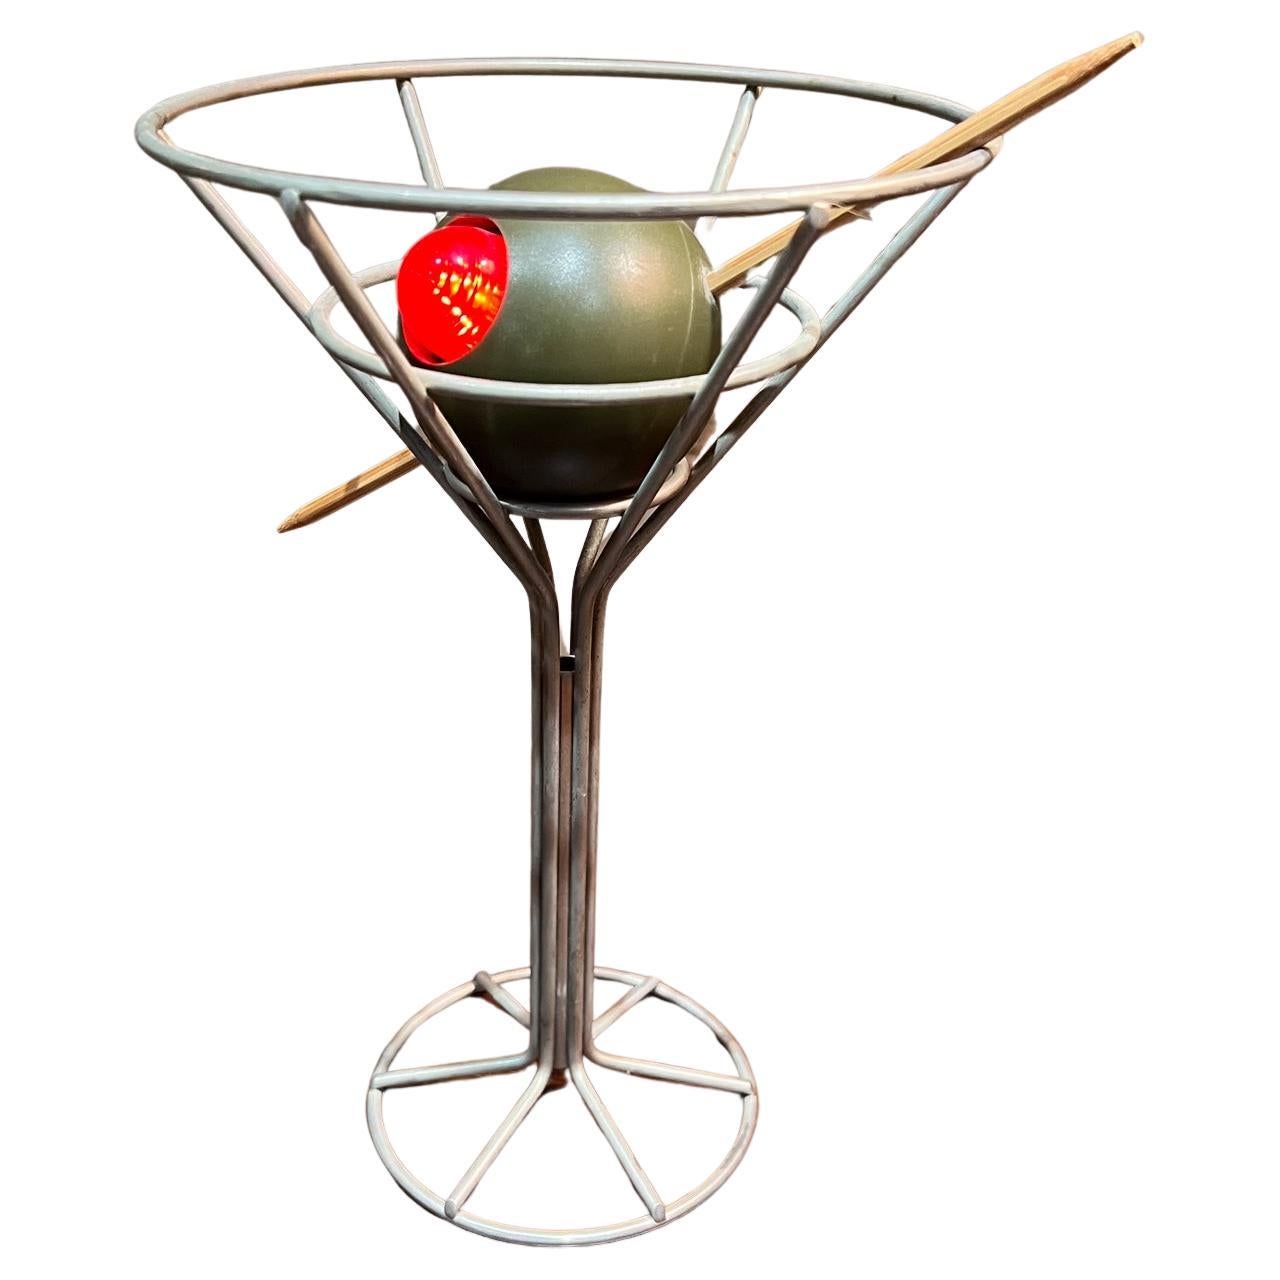 1993 Martini & Olive Chrome Bar Lamp by David Krys